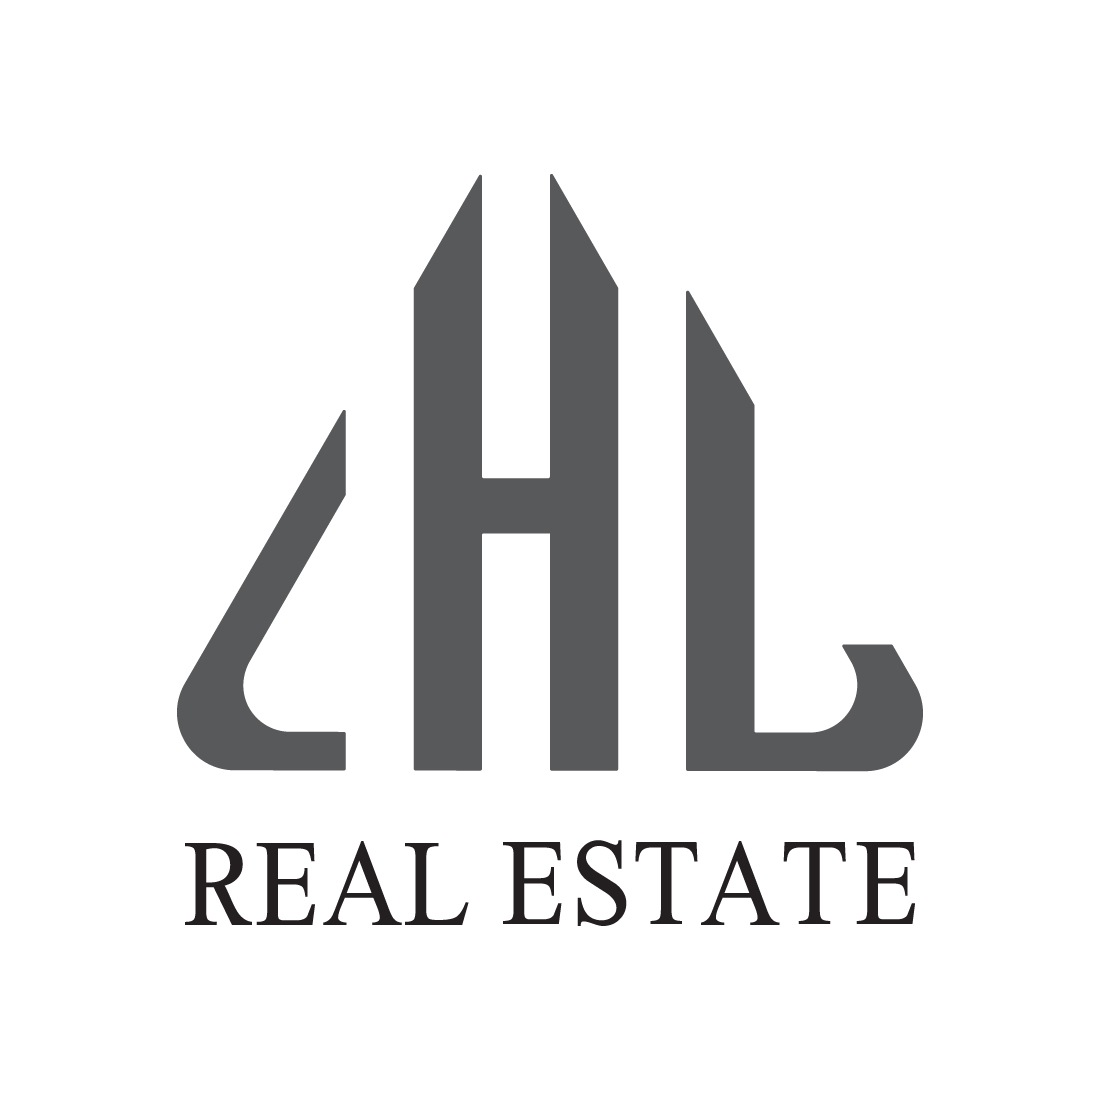 Luxury Real Estate Logo design vector icon design LHB Real Estate logo design black color Real Estate LHB logo Premium vector illustration preview image.